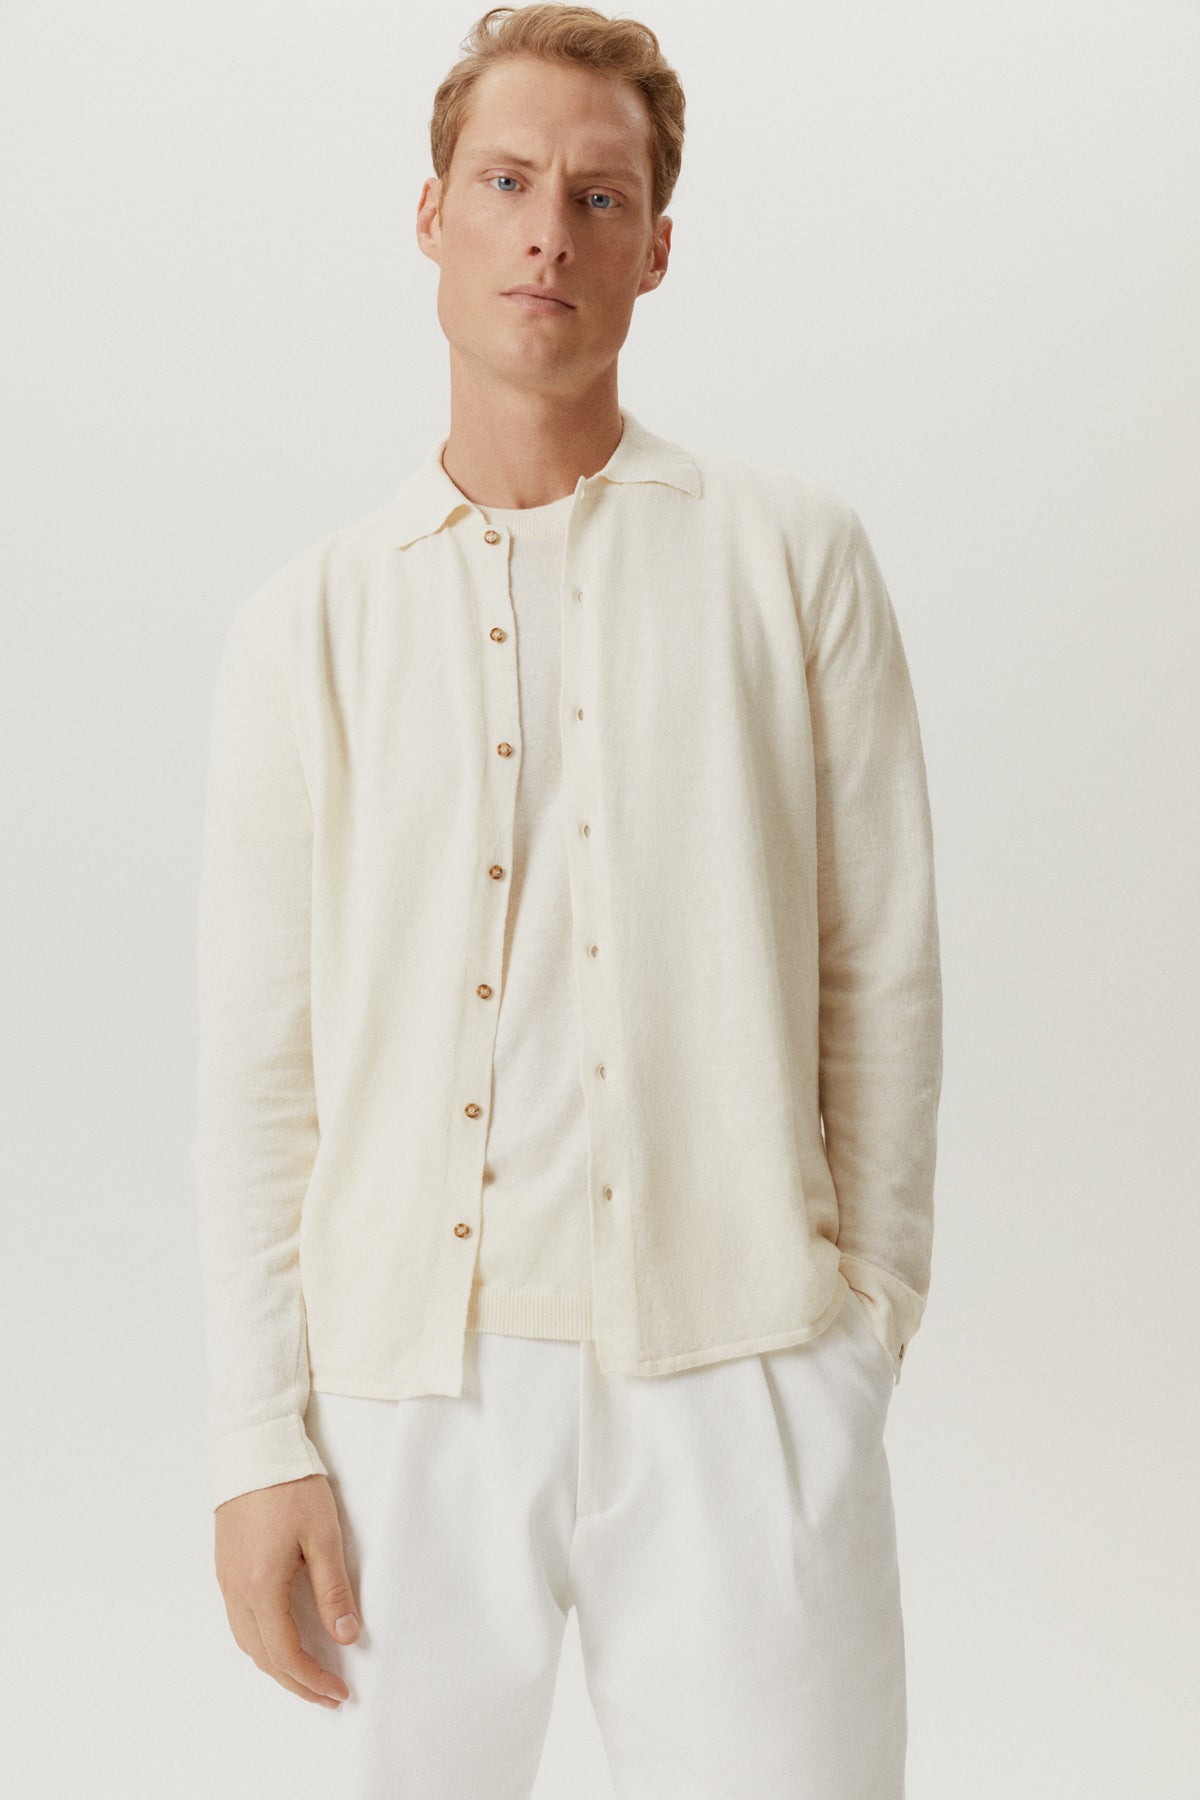 the linen cotton knit shirt milk white